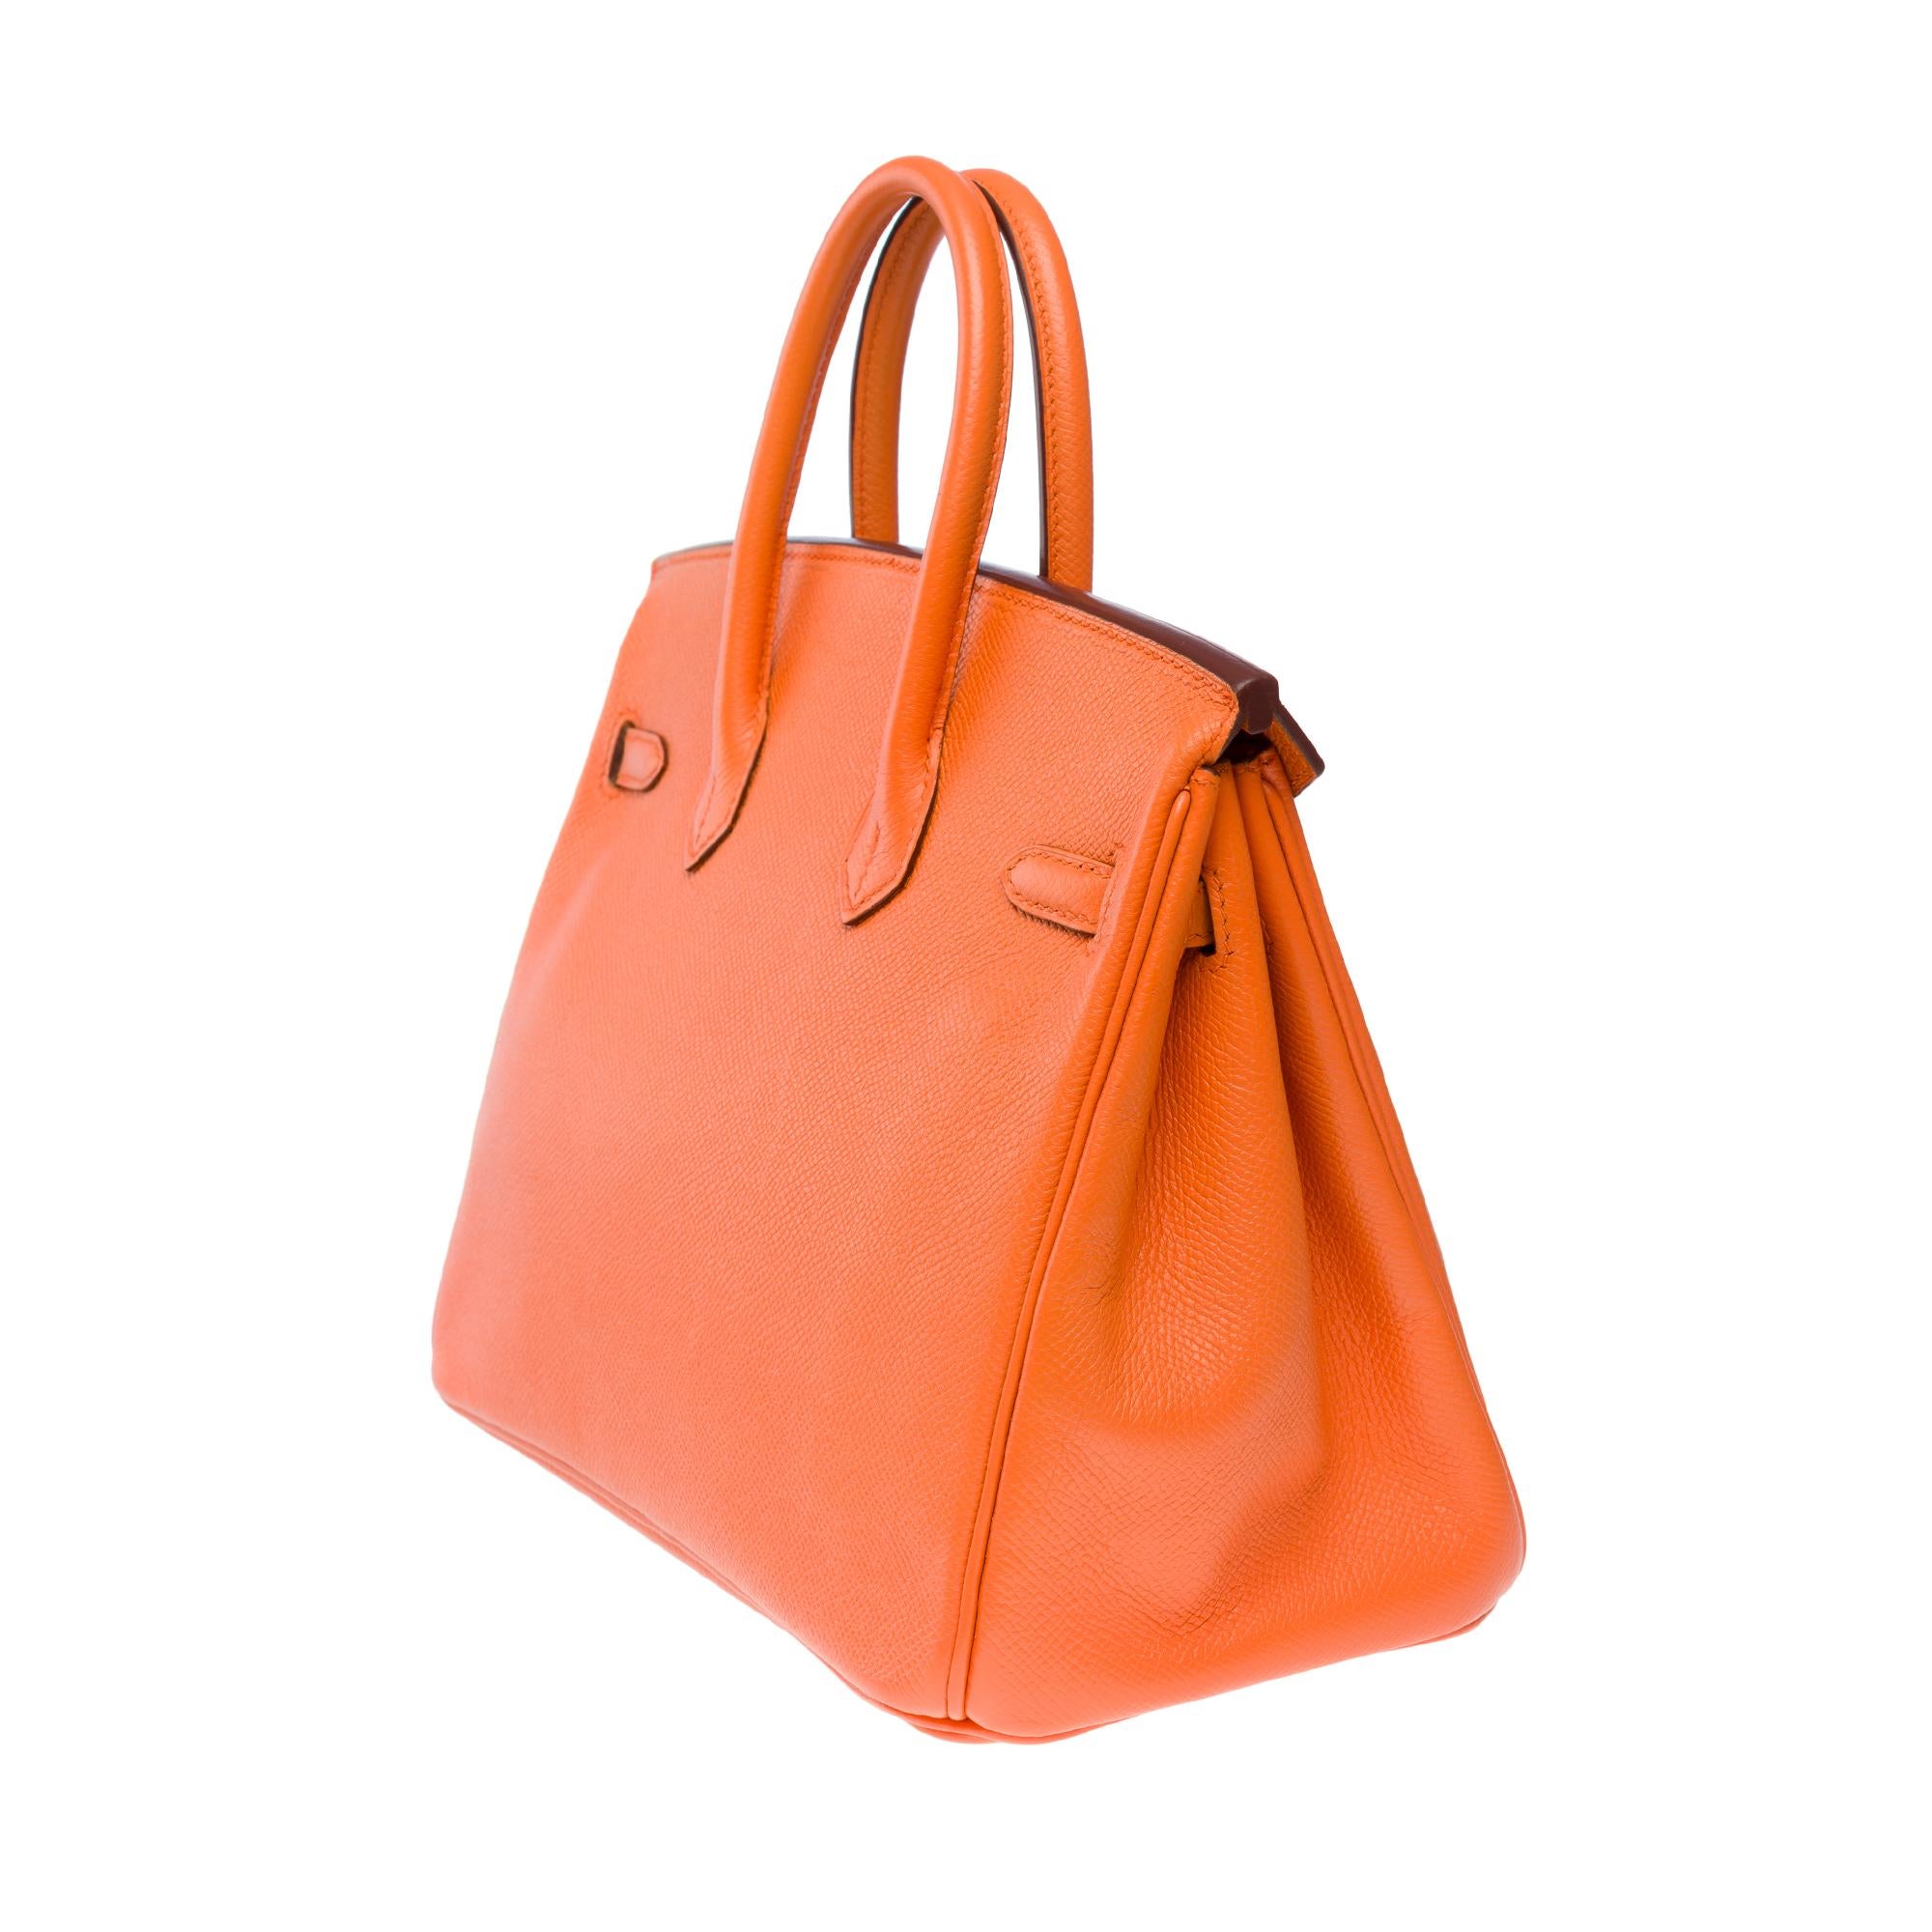 Bright Hermes Birkin 25cm handbag in Orange Epsom calf leather, SHW For Sale 3